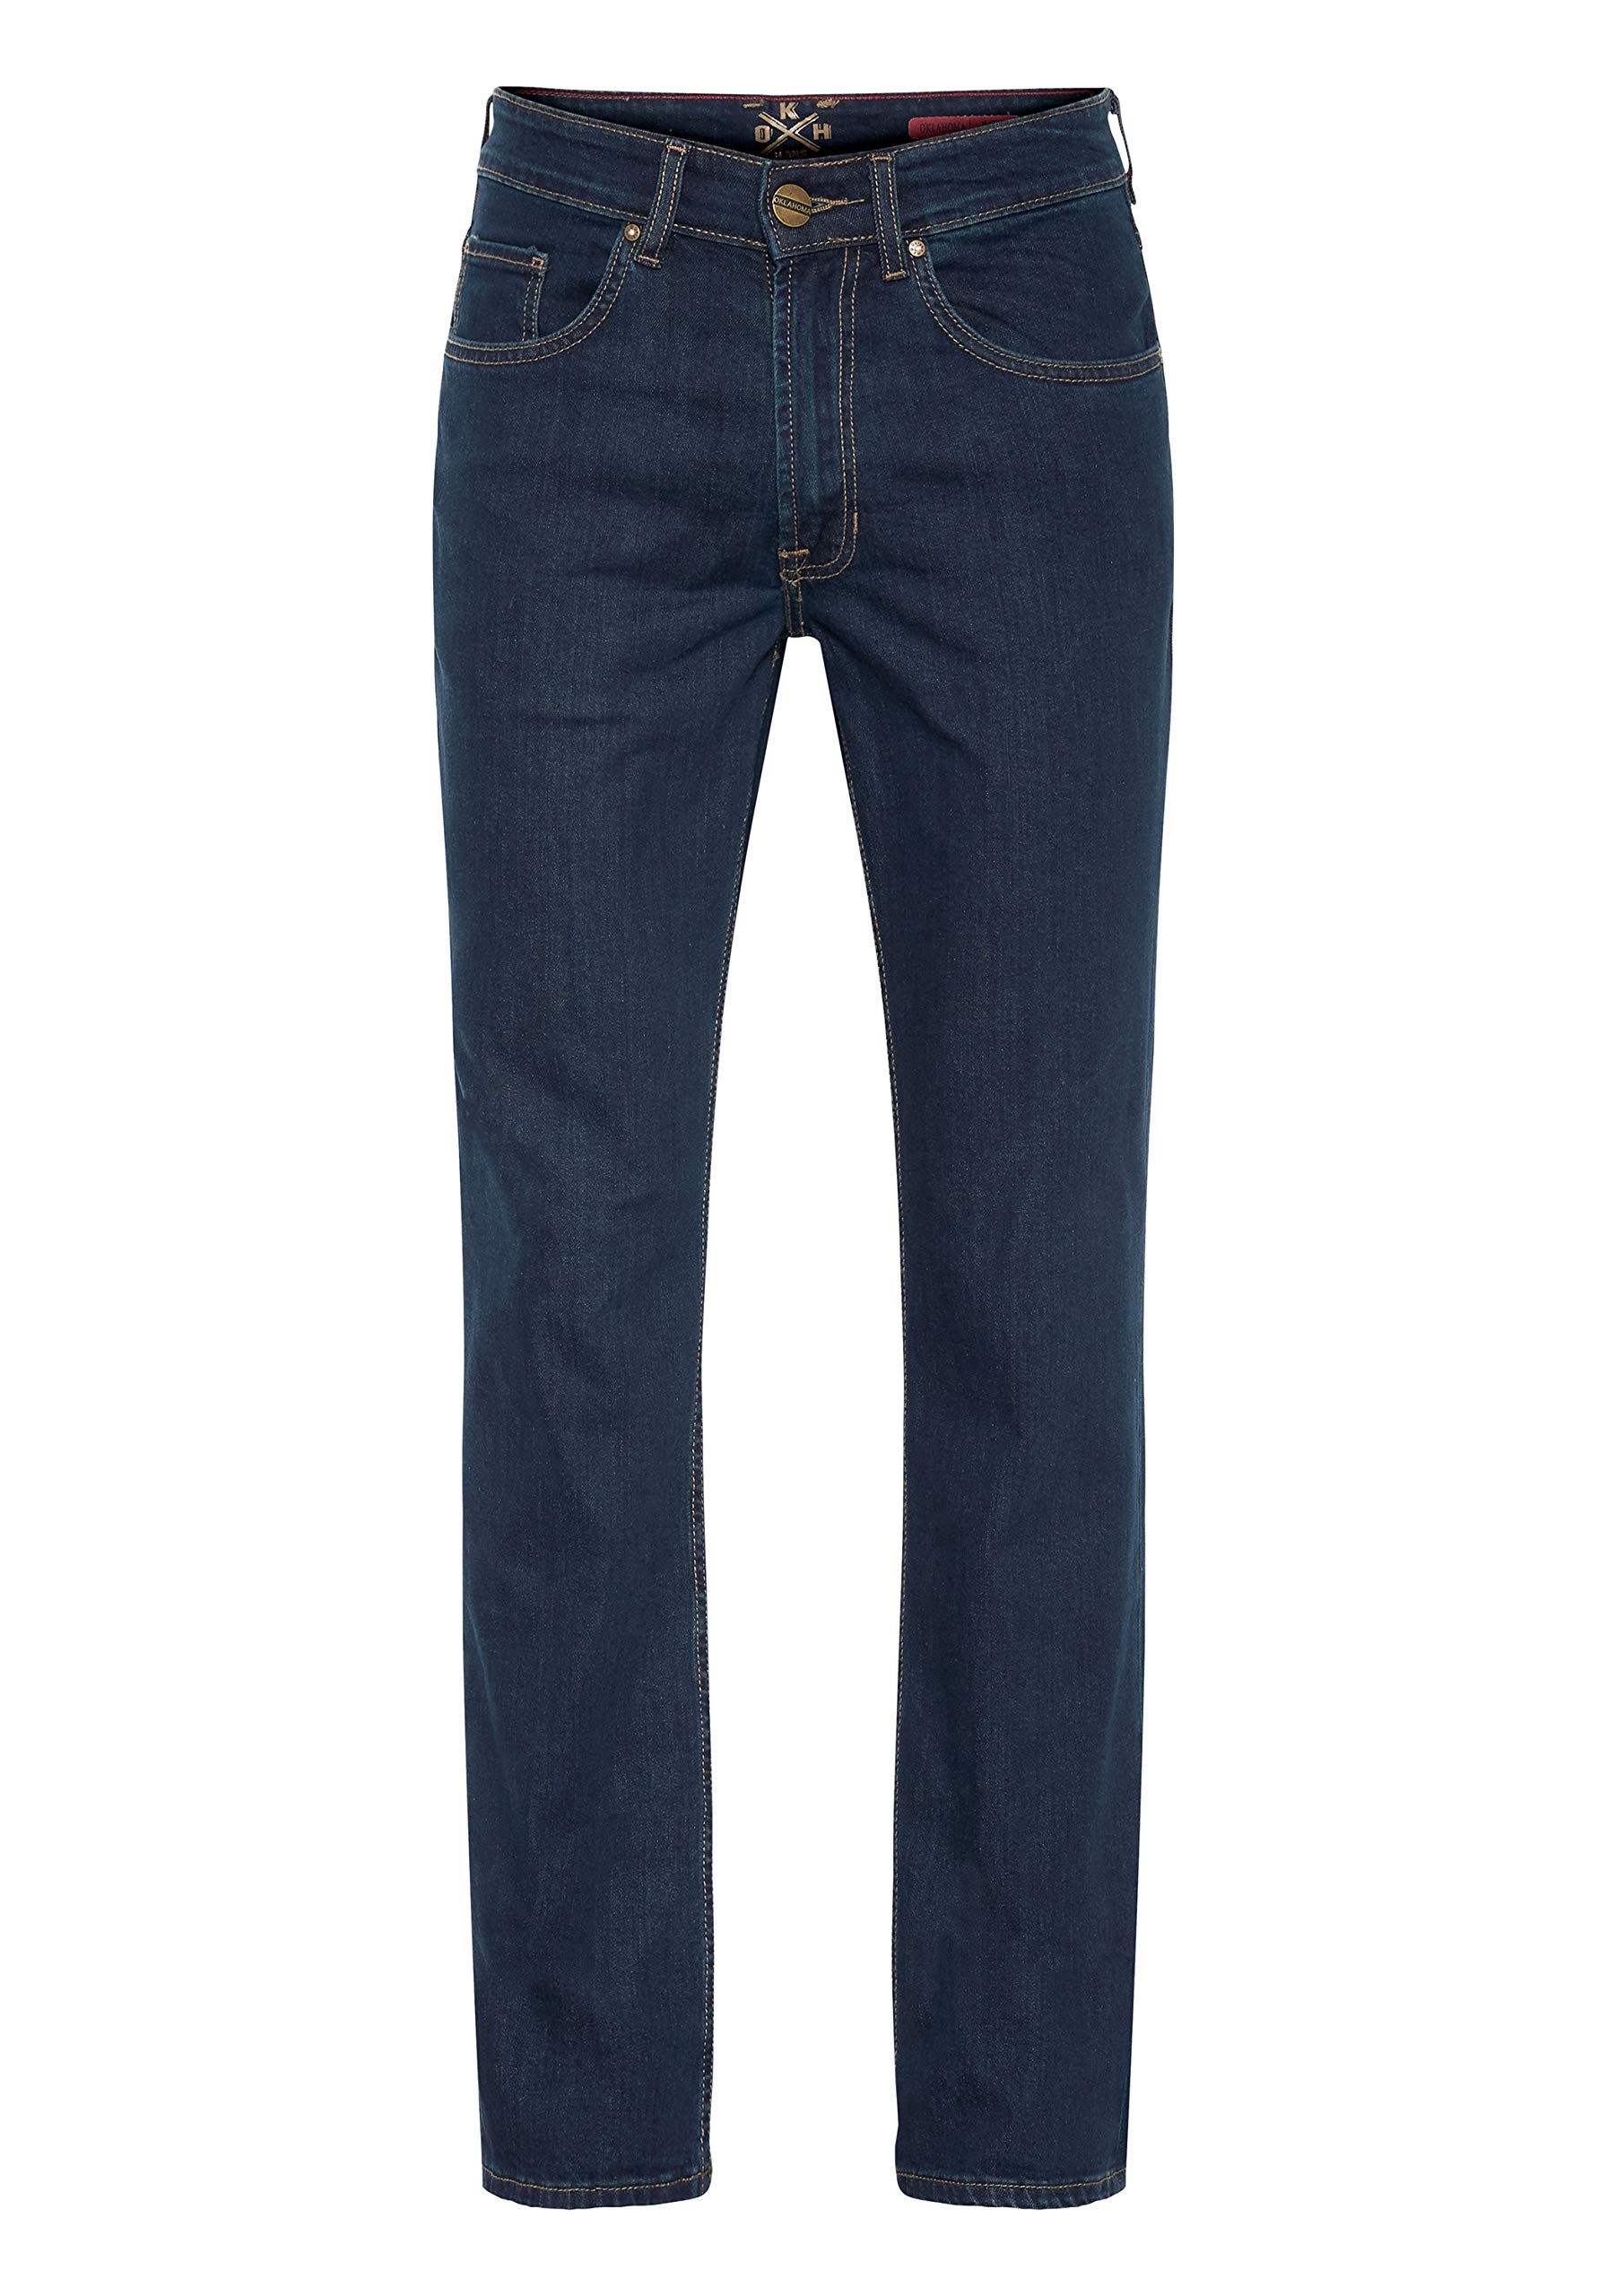 Oklahoma Jeans Herren Straight Jeans R140, Blau (Overdyed 004), W34/L34